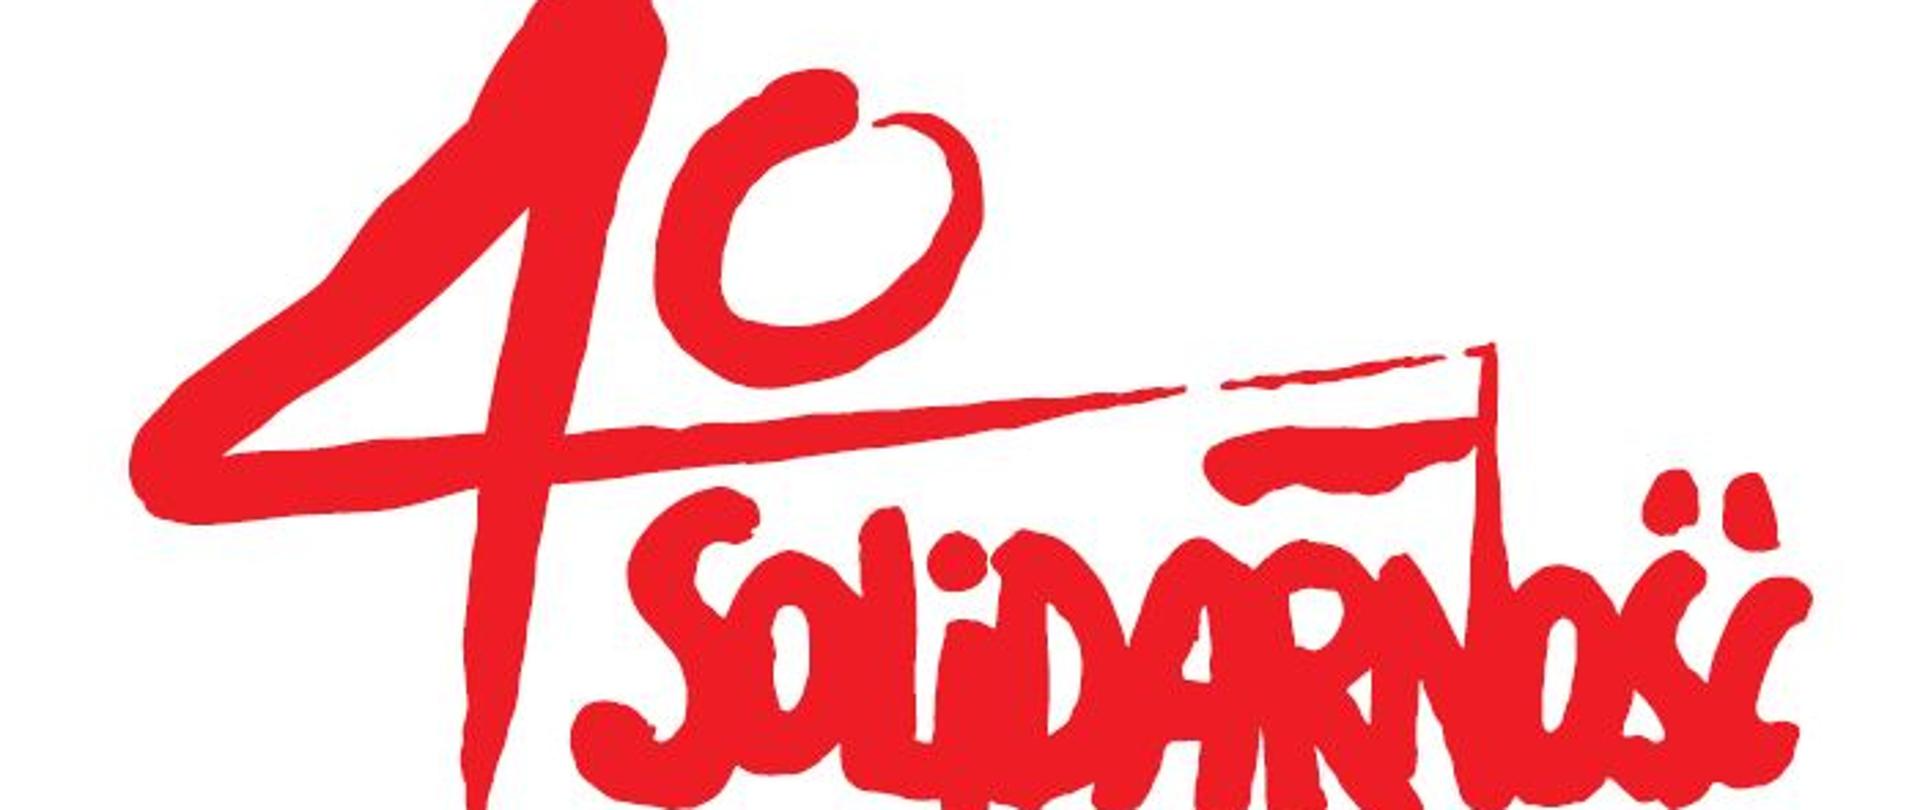 solidarnosc_logo